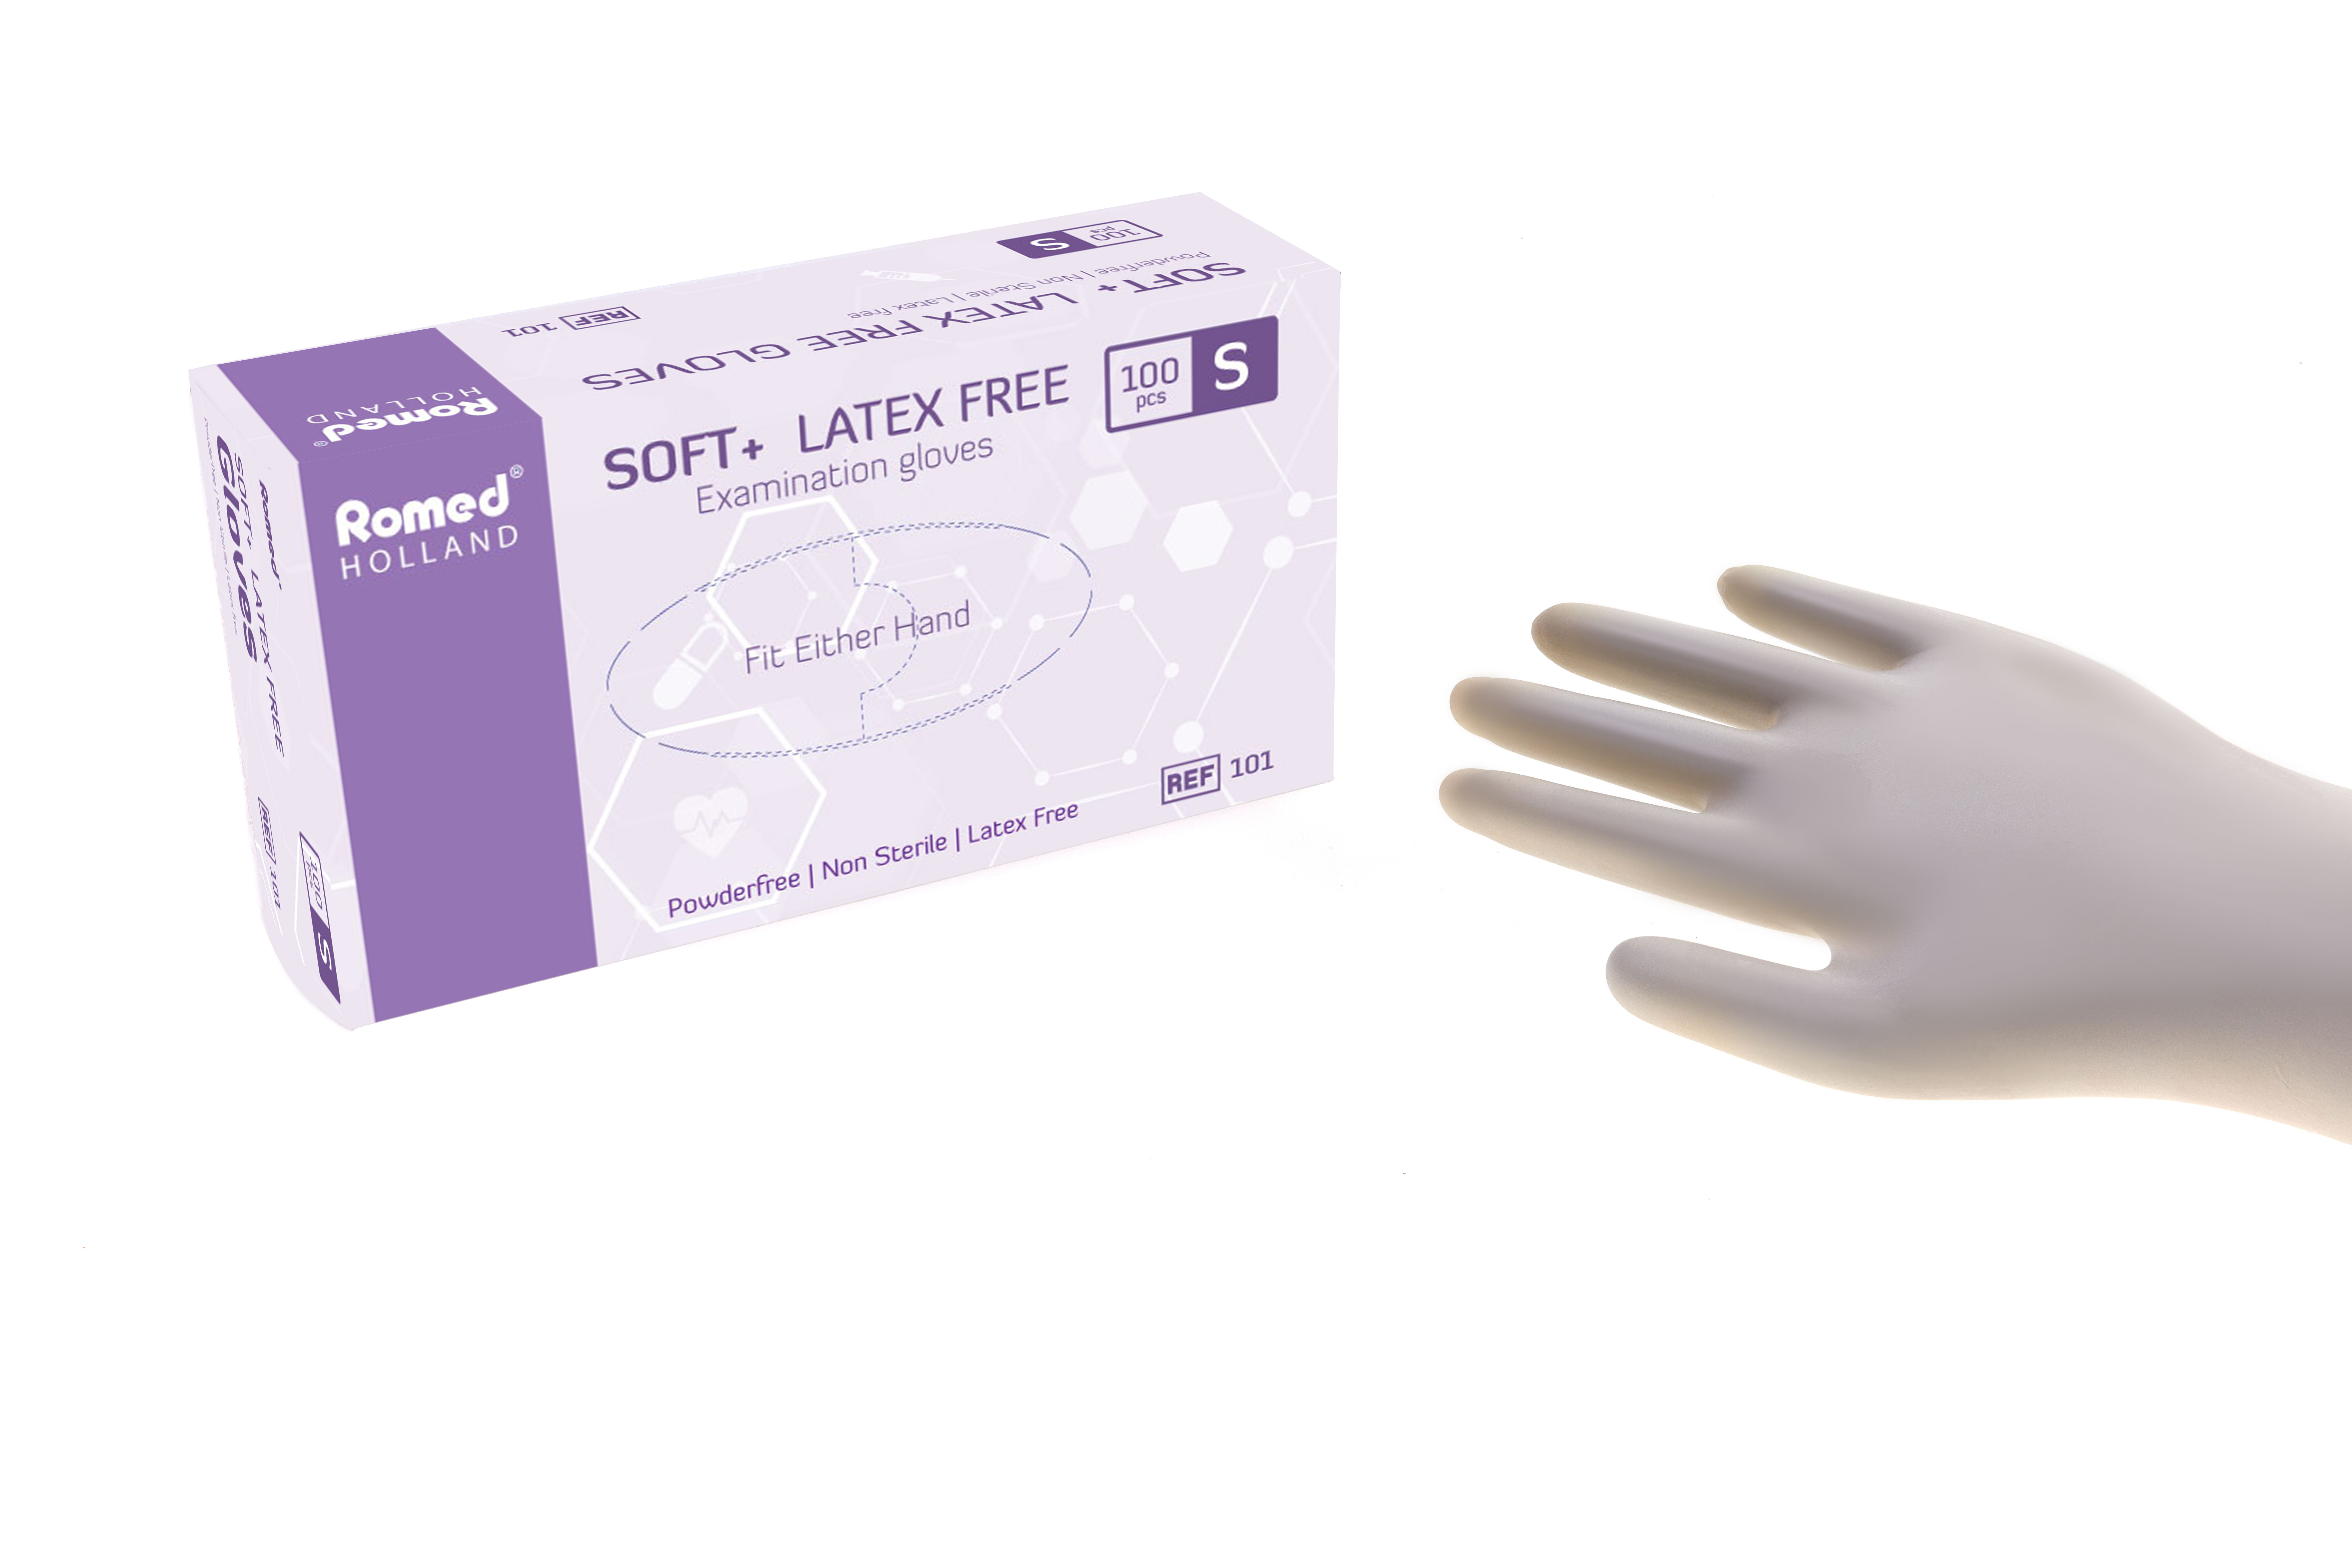 Soft+ latex free examination gloves, non sterile, powderfree